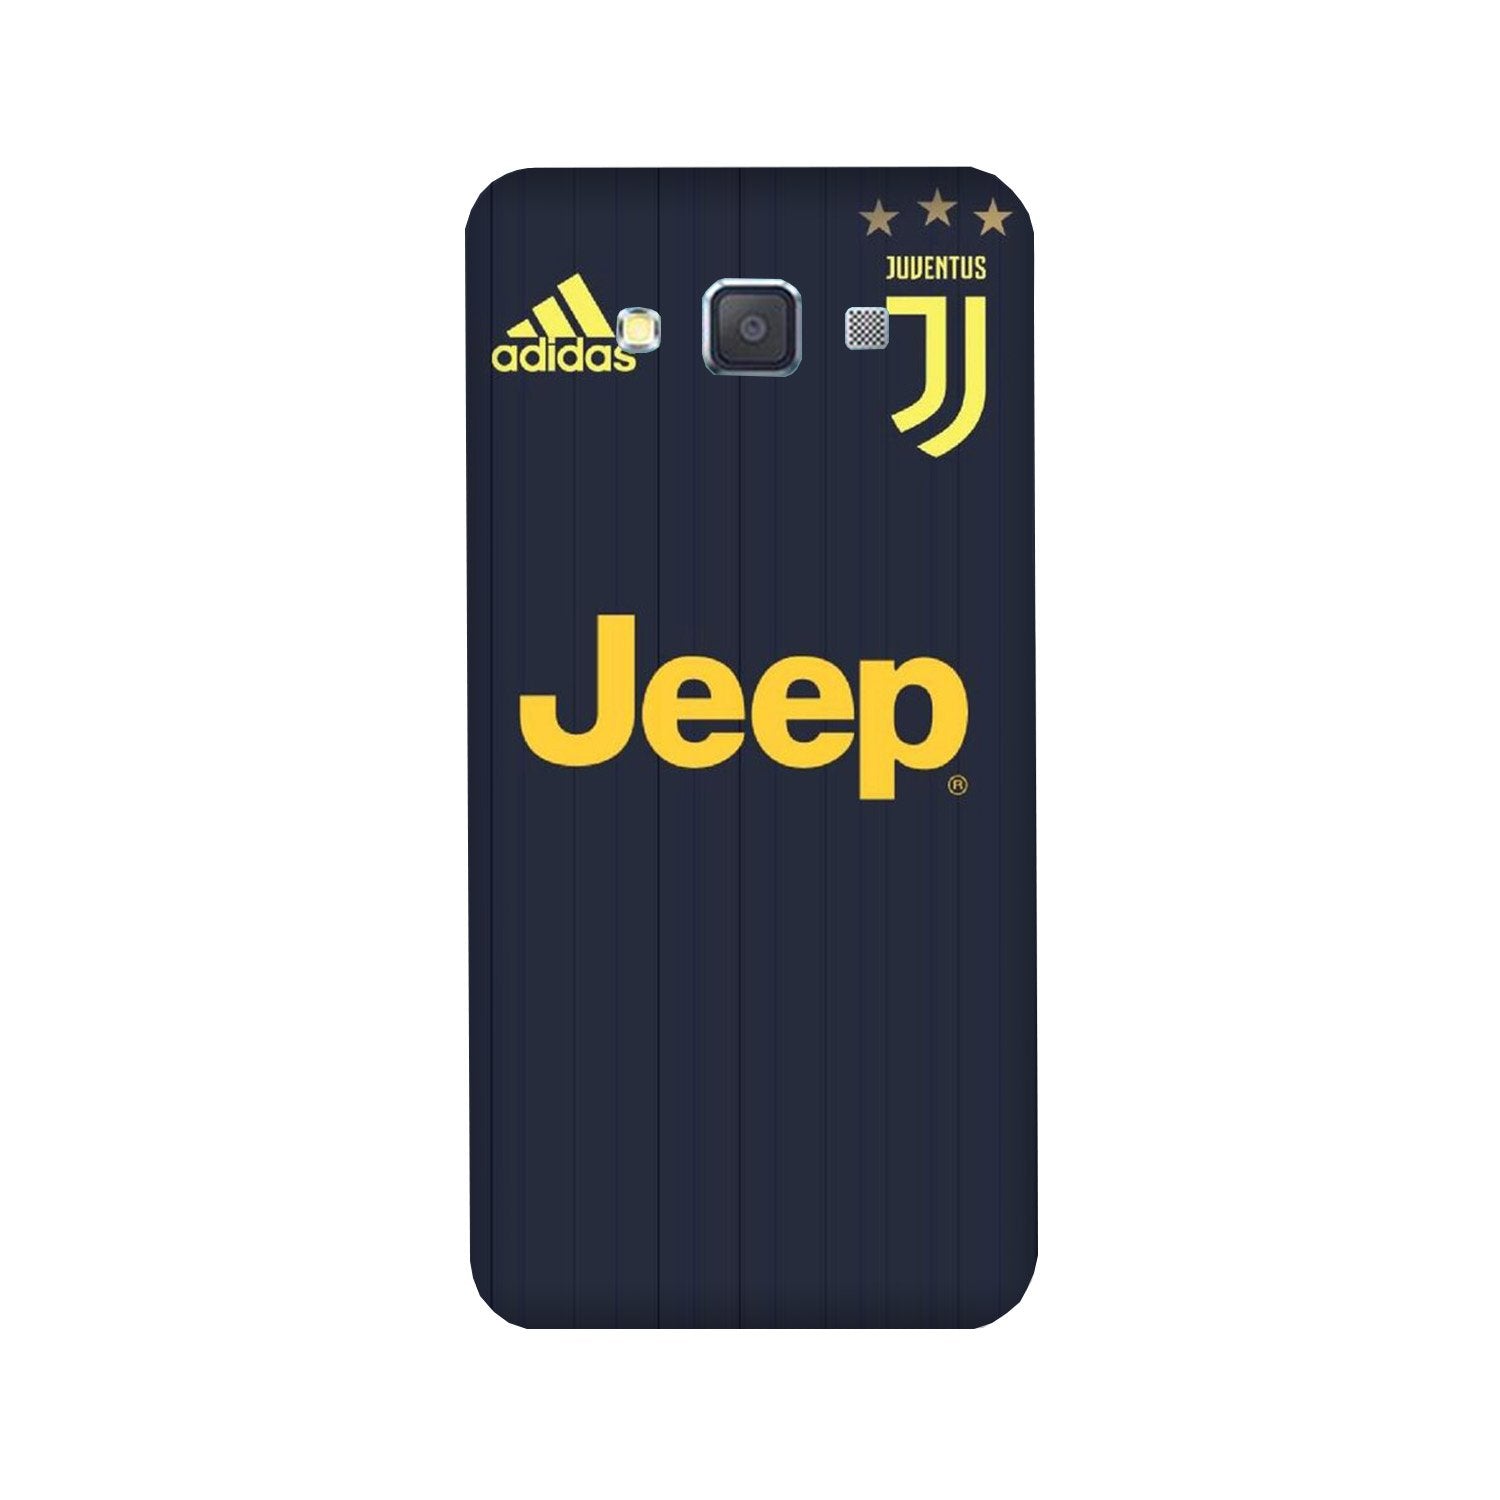 Jeep Juventus Case for Galaxy A5 (2015)  (Design - 161)